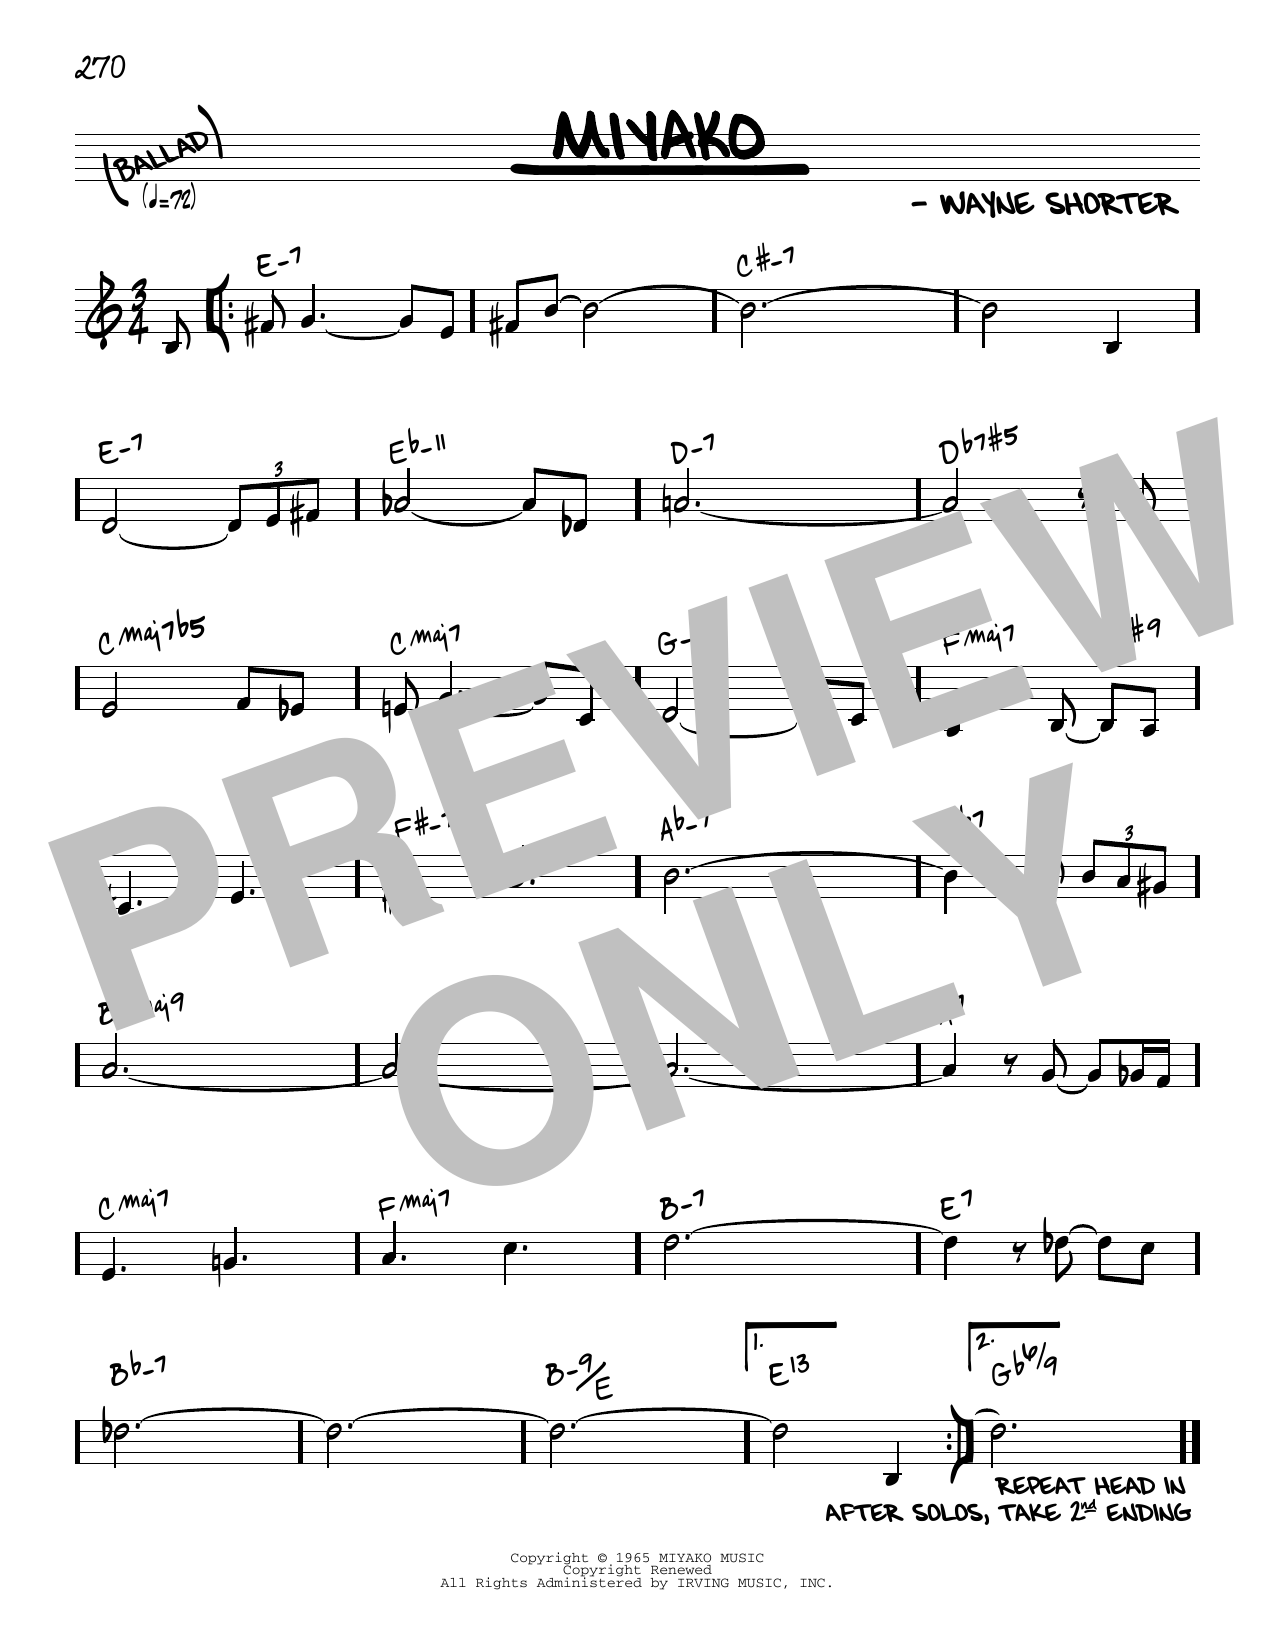 Wayne Shorter Miyako [Reharmonized version] (arr. Jack Grassel) Sheet Music Notes & Chords for Real Book – Melody & Chords - Download or Print PDF